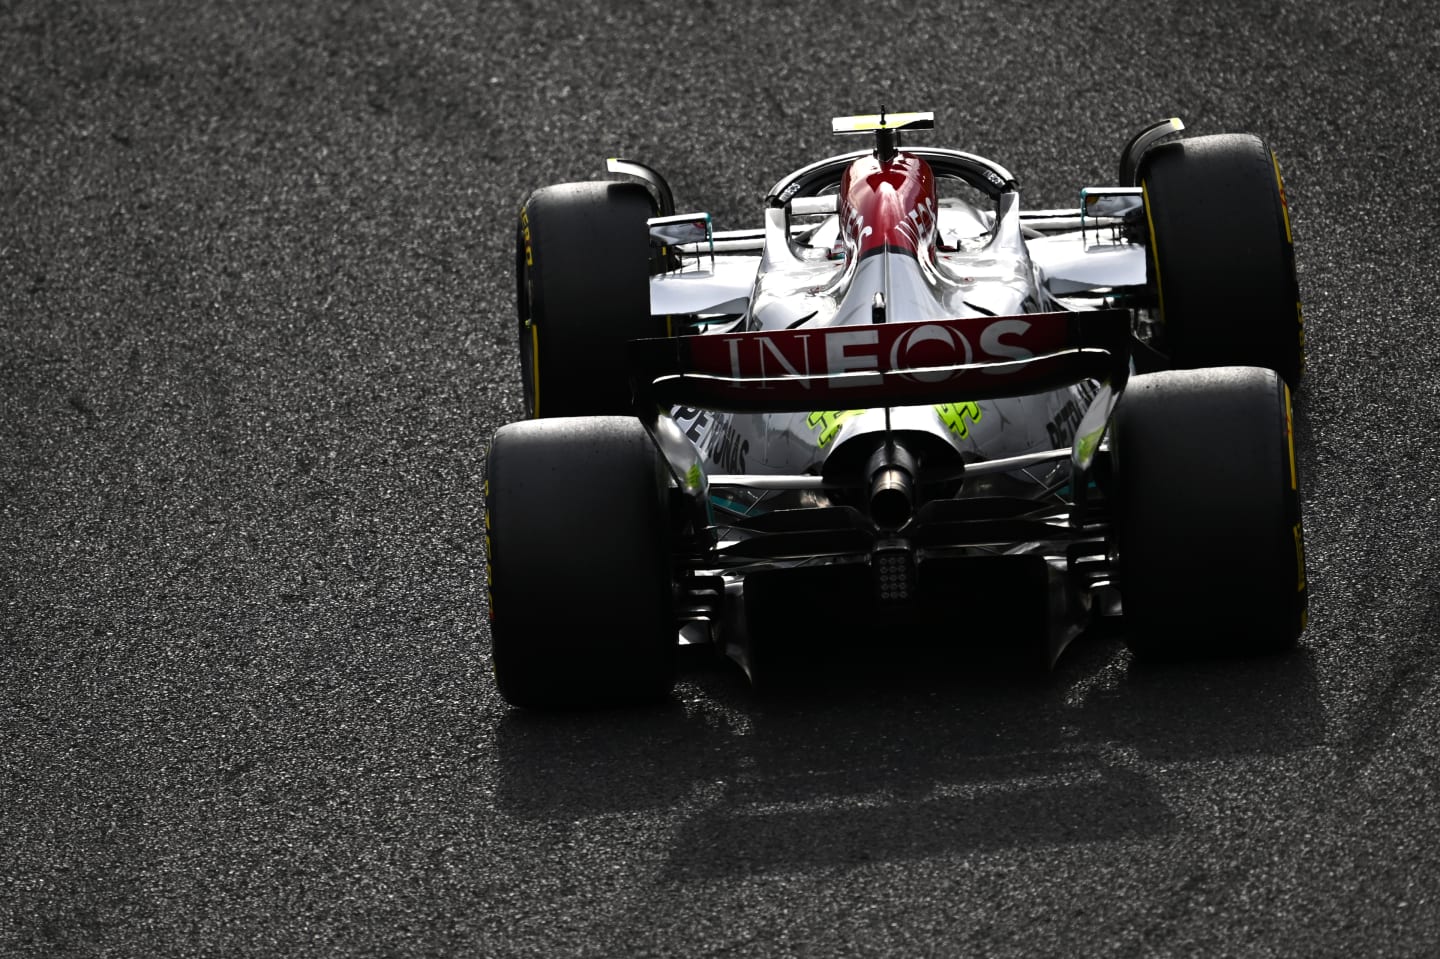 SUZUKA, JAPAN - OCTOBER 08: Lewis Hamilton of Great Britain driving the (44) Mercedes AMG Petronas